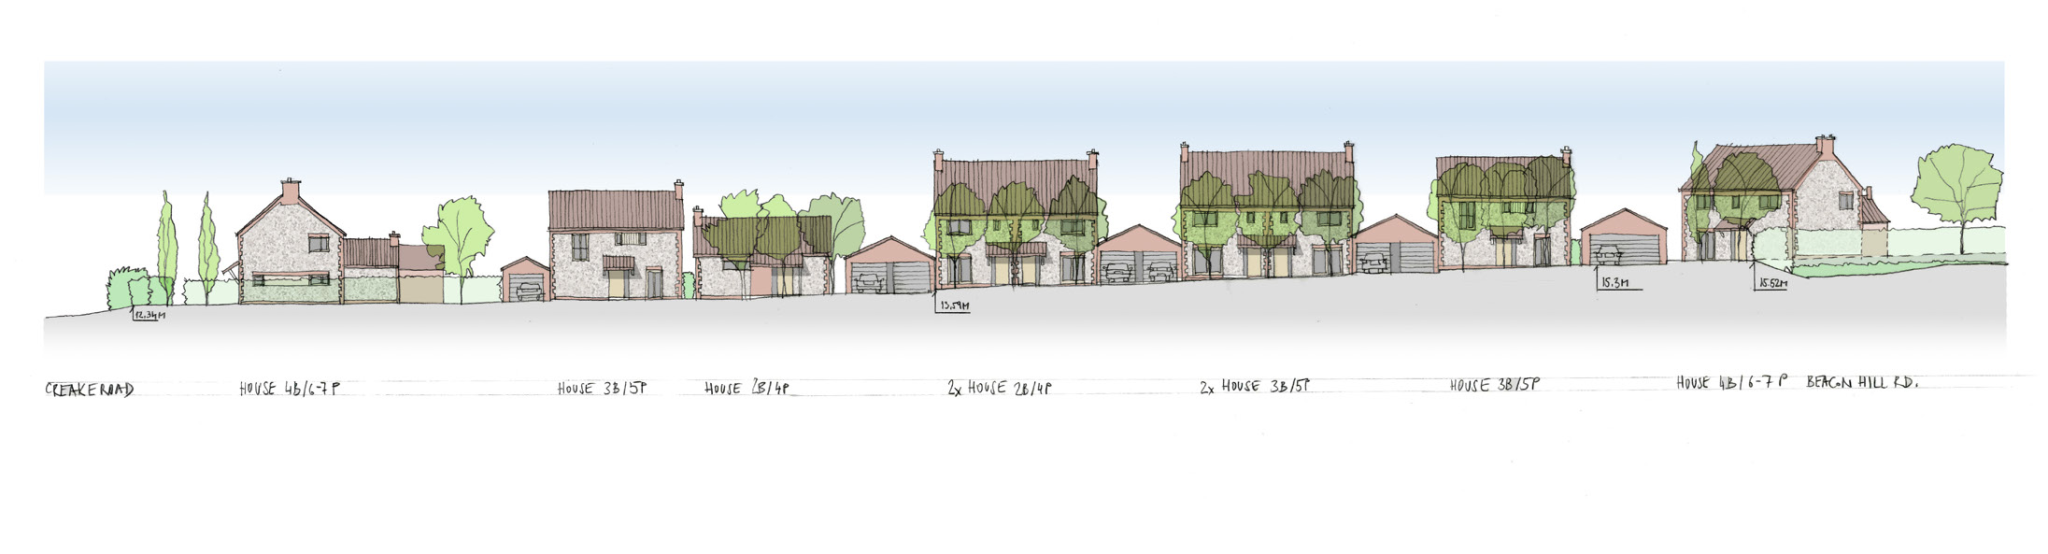 Illustration of potential street scene at proposed development in Burnham Market